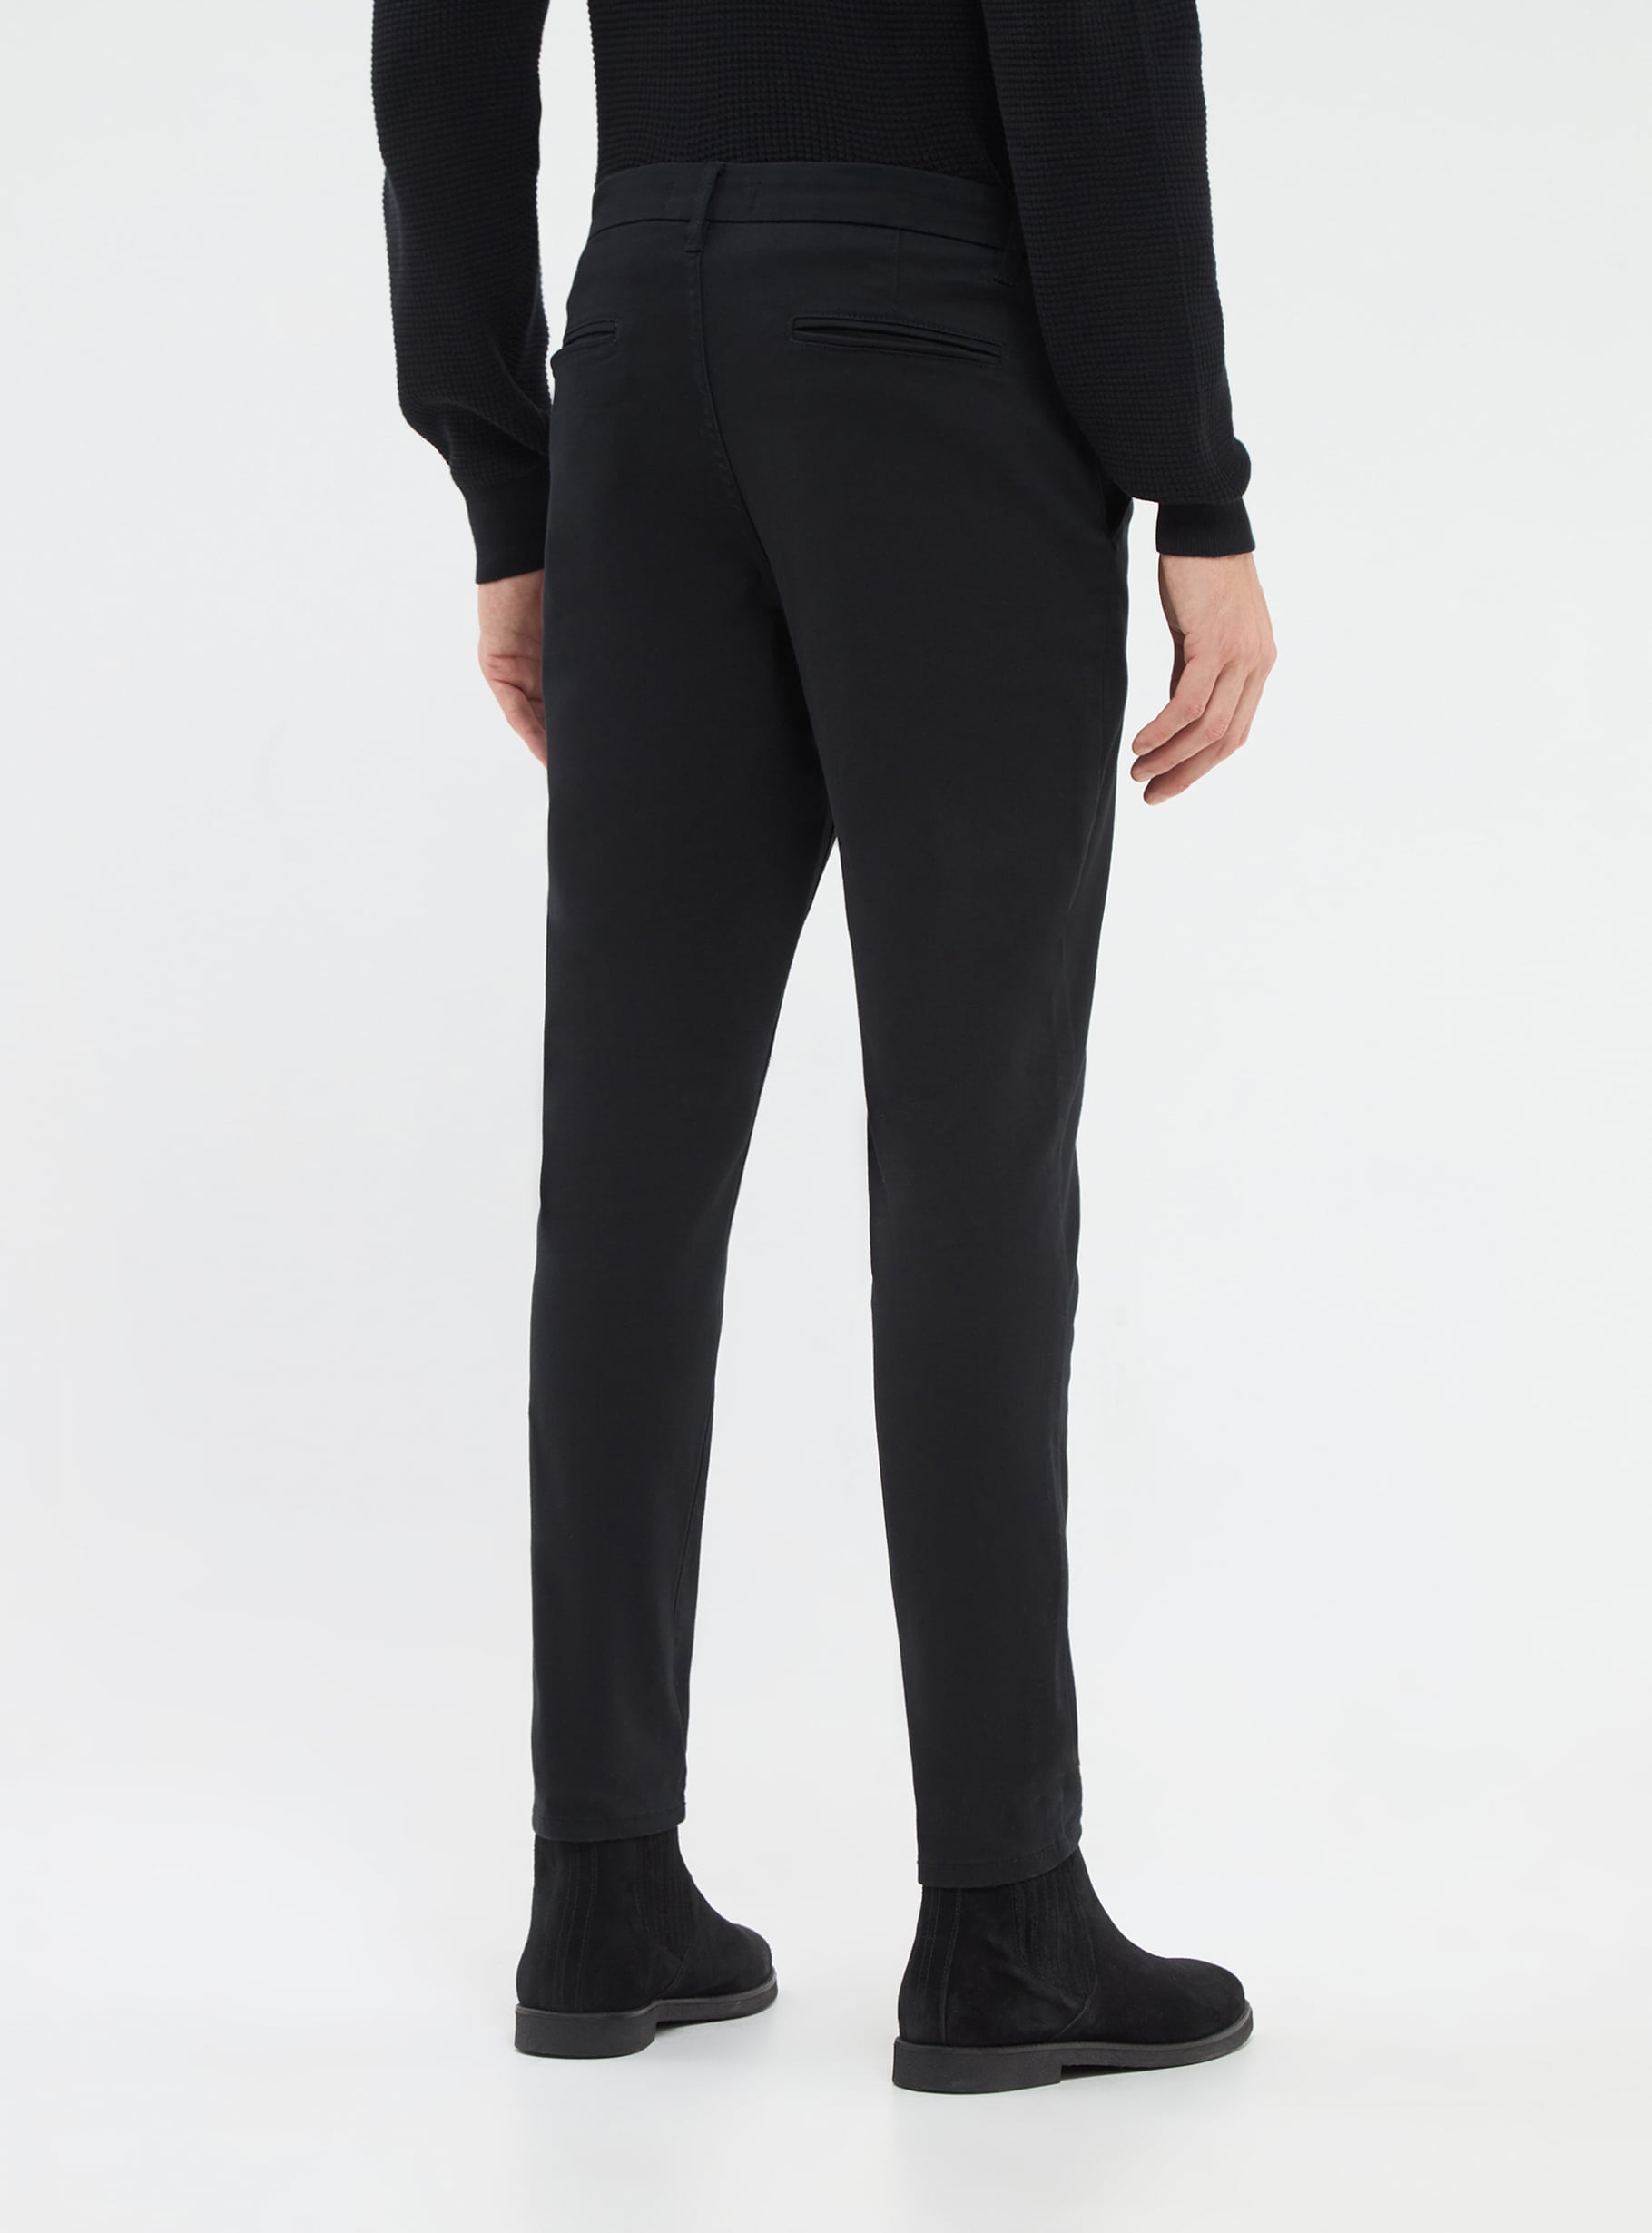 New Zara Big Boy Extrafine Wool Suit Pants Dress Formal Pants Size 10 Navy  | eBay